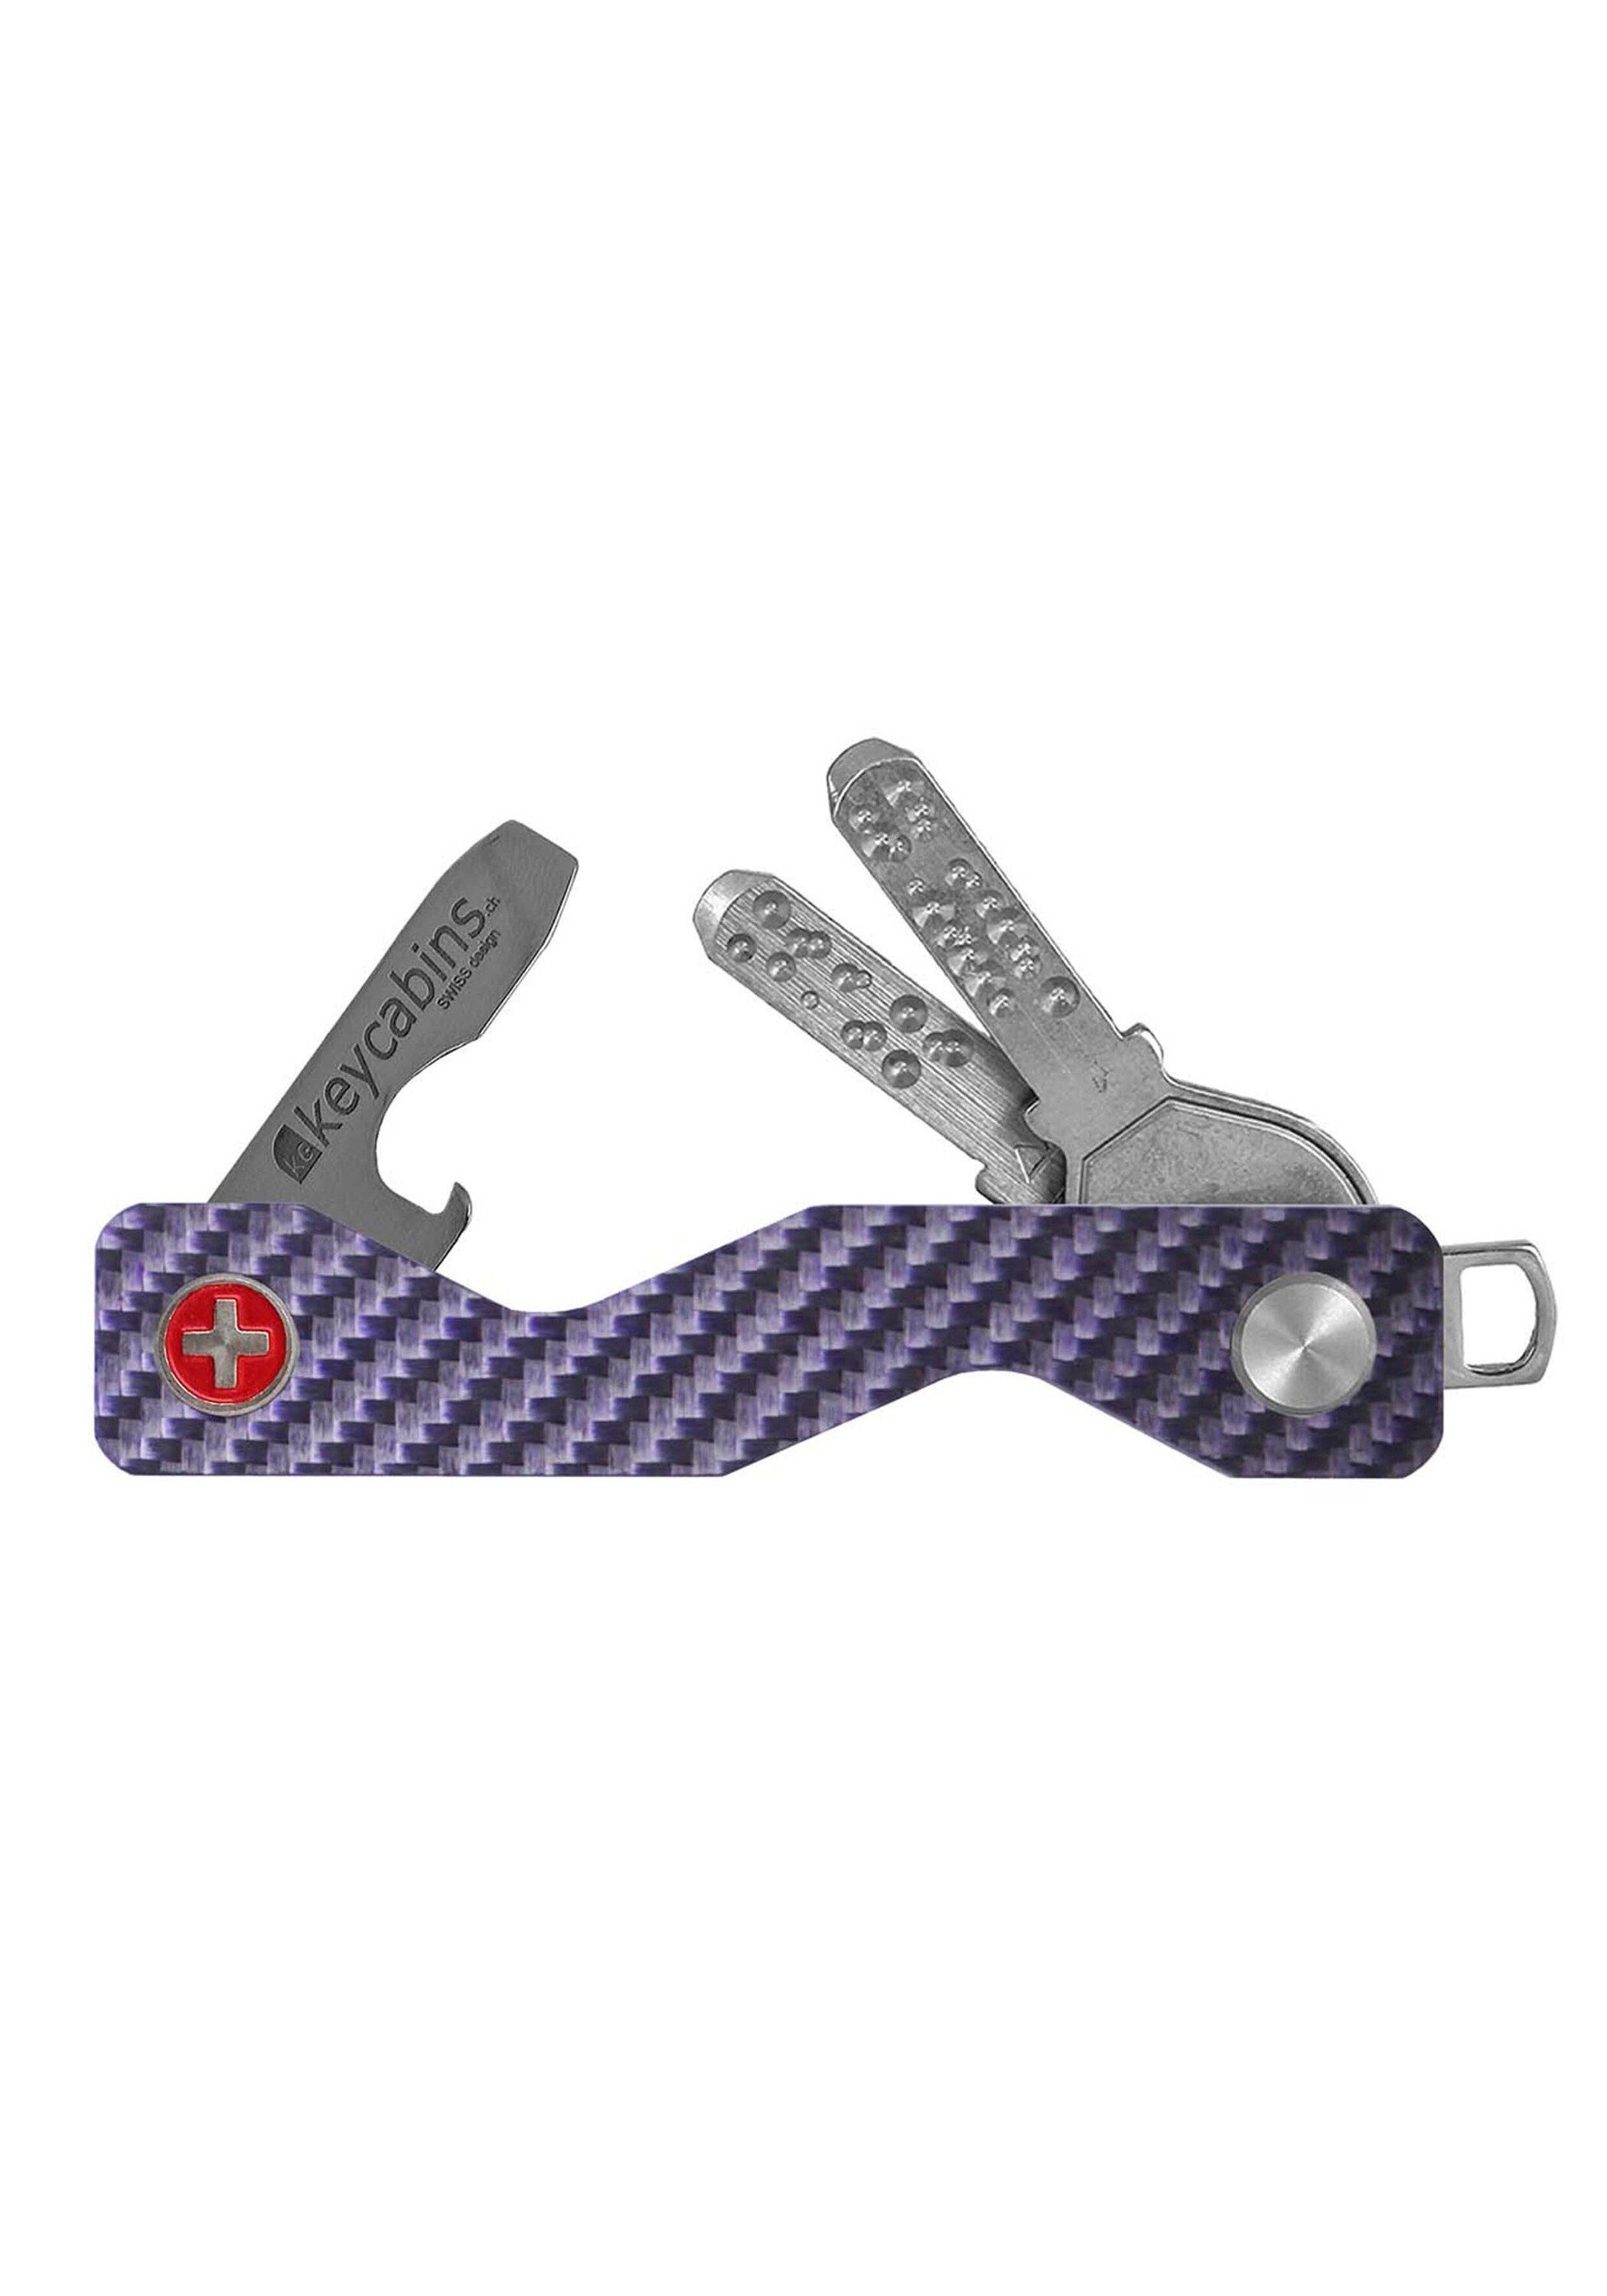 keycabins Schlüsselanhänger Carbon S3, SWISS Made violett | Schlüsselanhänger